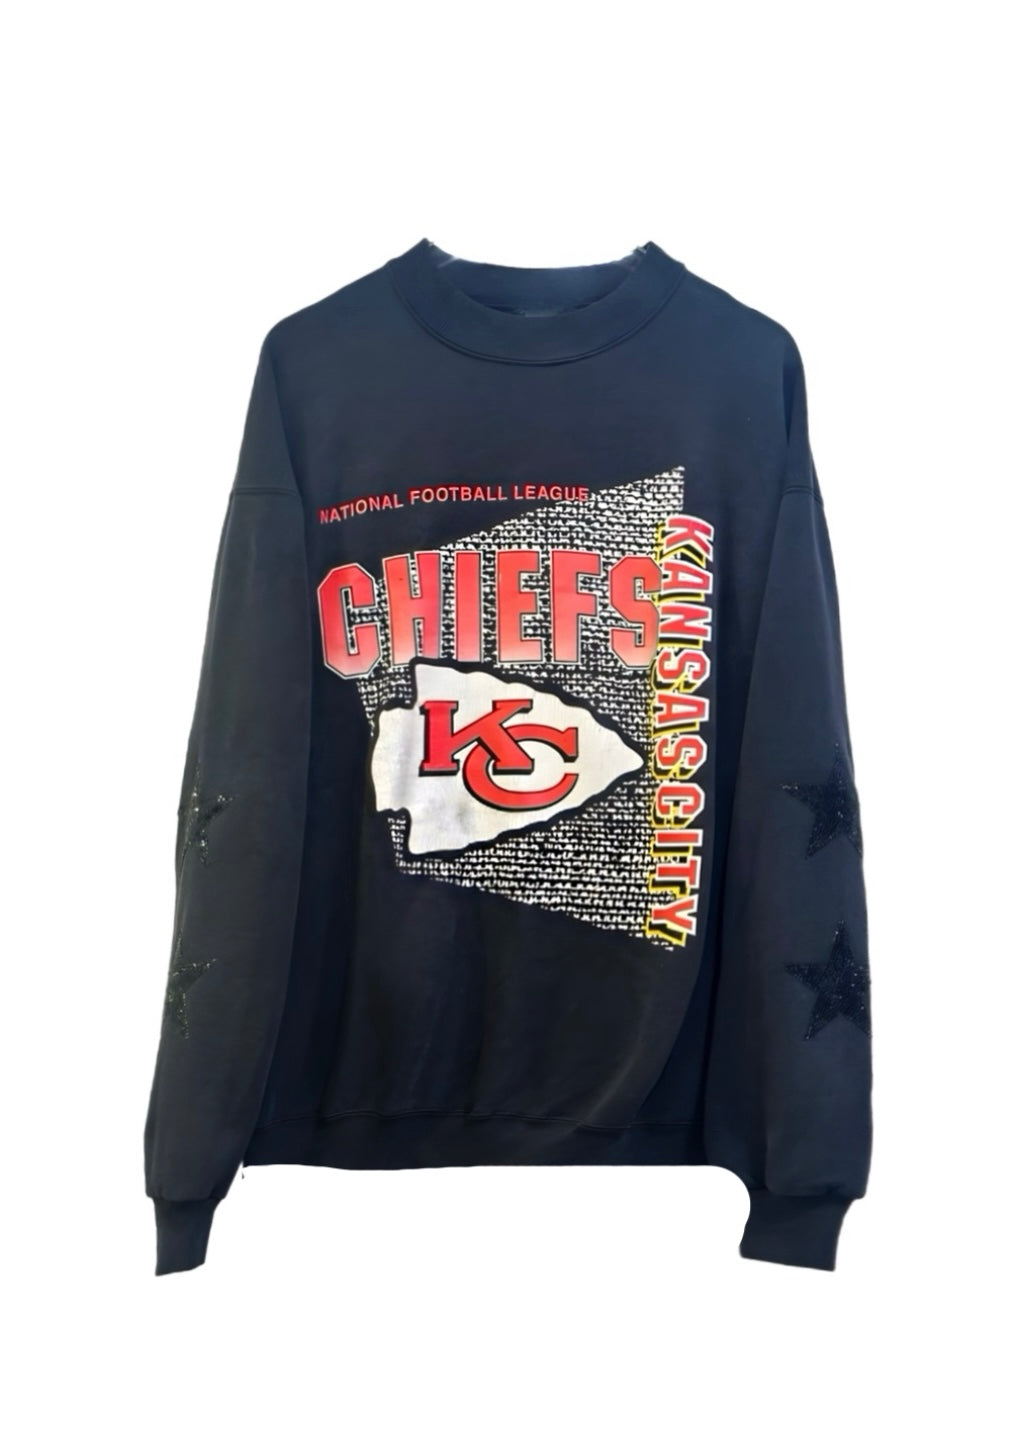 Kansas City Chiefs, NFL One of a KIND Vintage Sweatshirt with Black Crystal Star Design